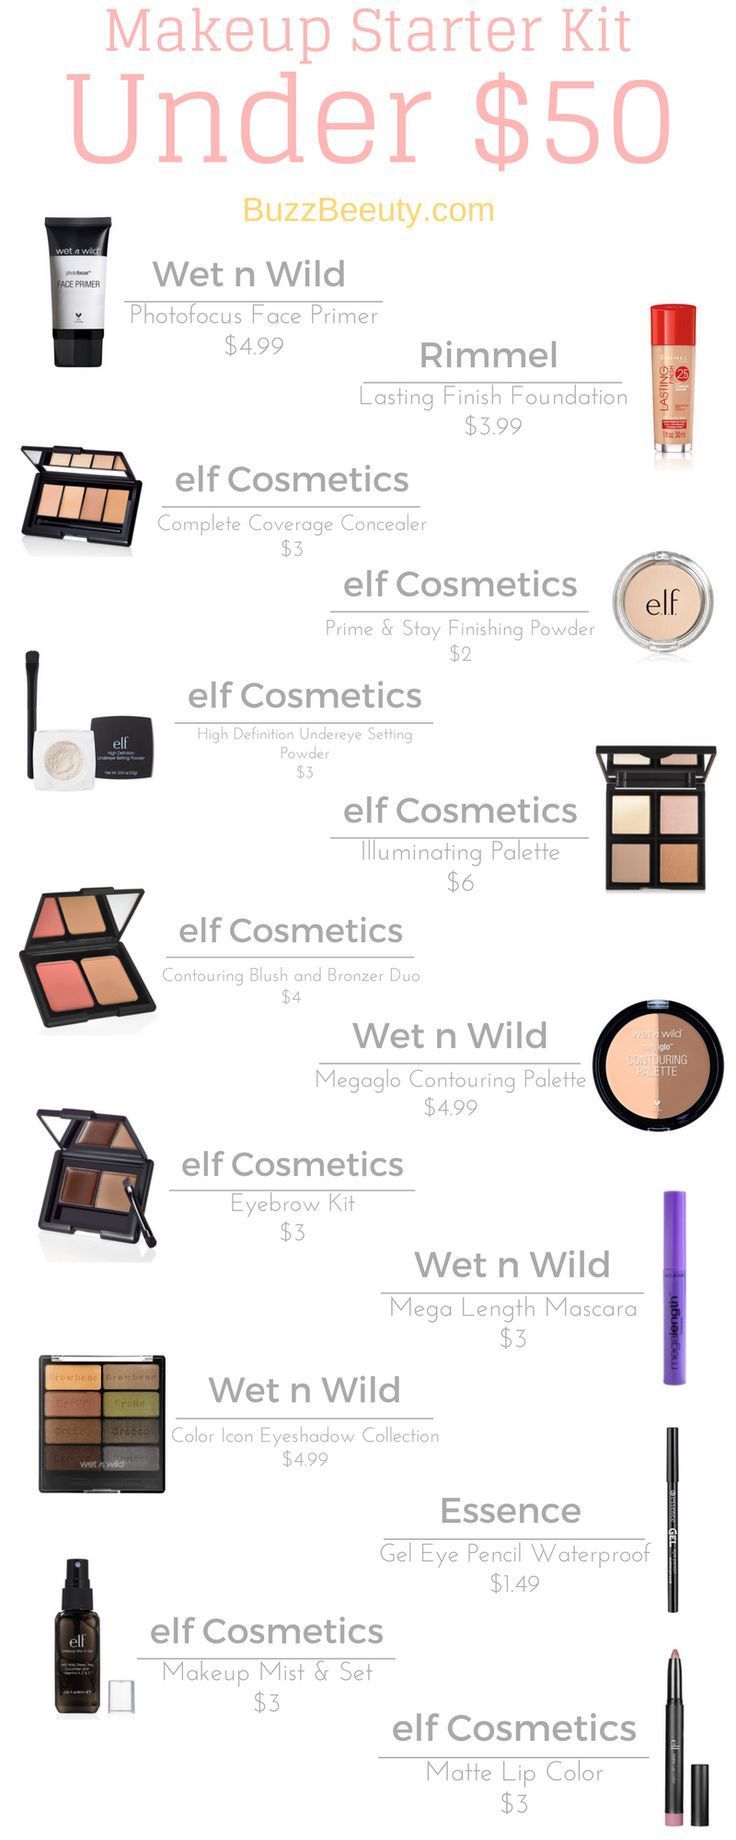 Makeup Kits On a Budget - Starter Kits Under $50 and $100 -   15 makeup Beauty budget ideas